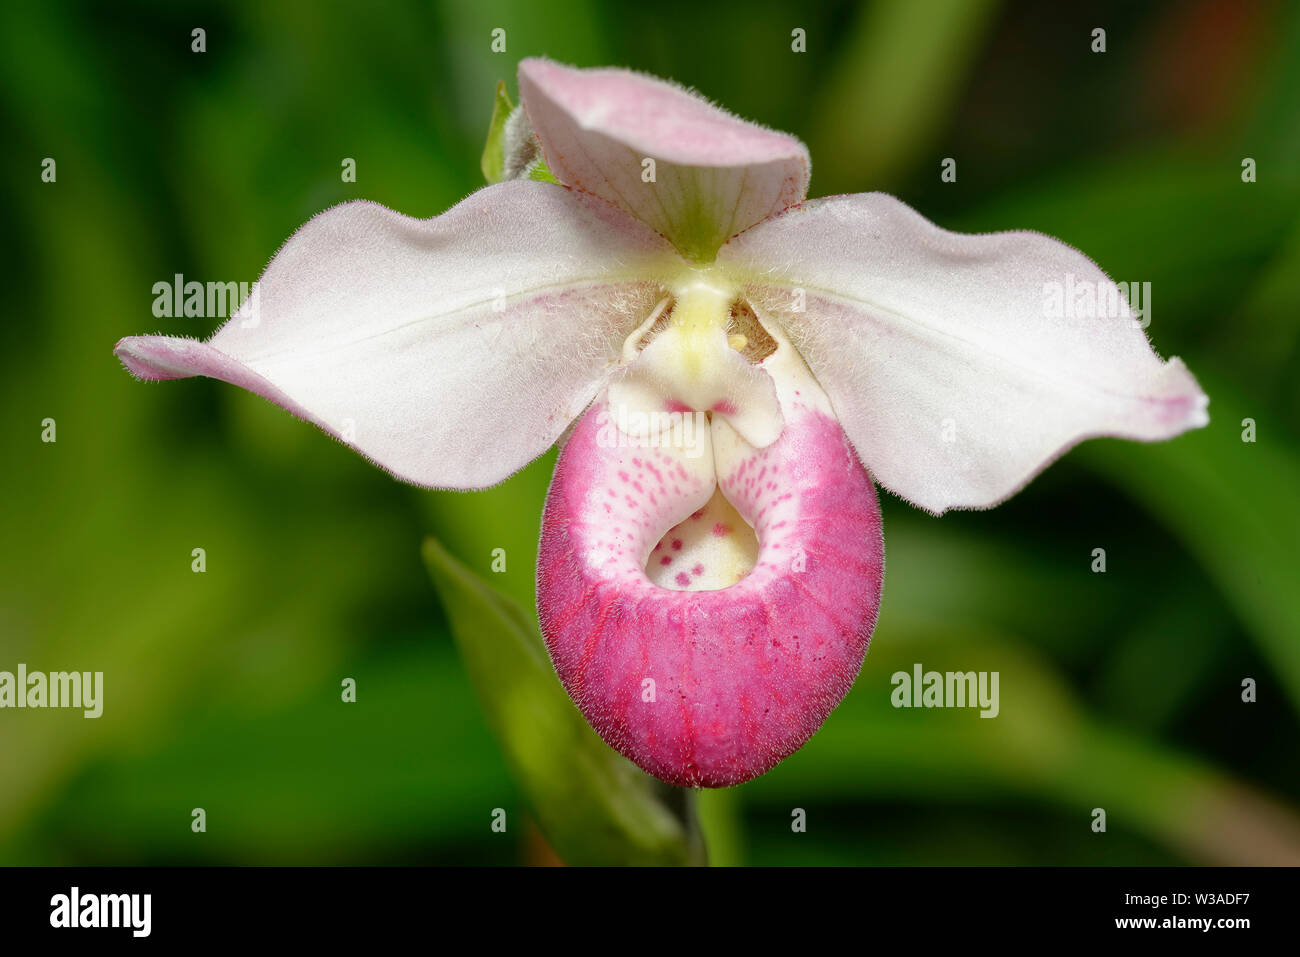 Schlimm's Phragmipedium Orchid - Phragmipedium schlimii  Slipper Orchid from Colombia Stock Photo